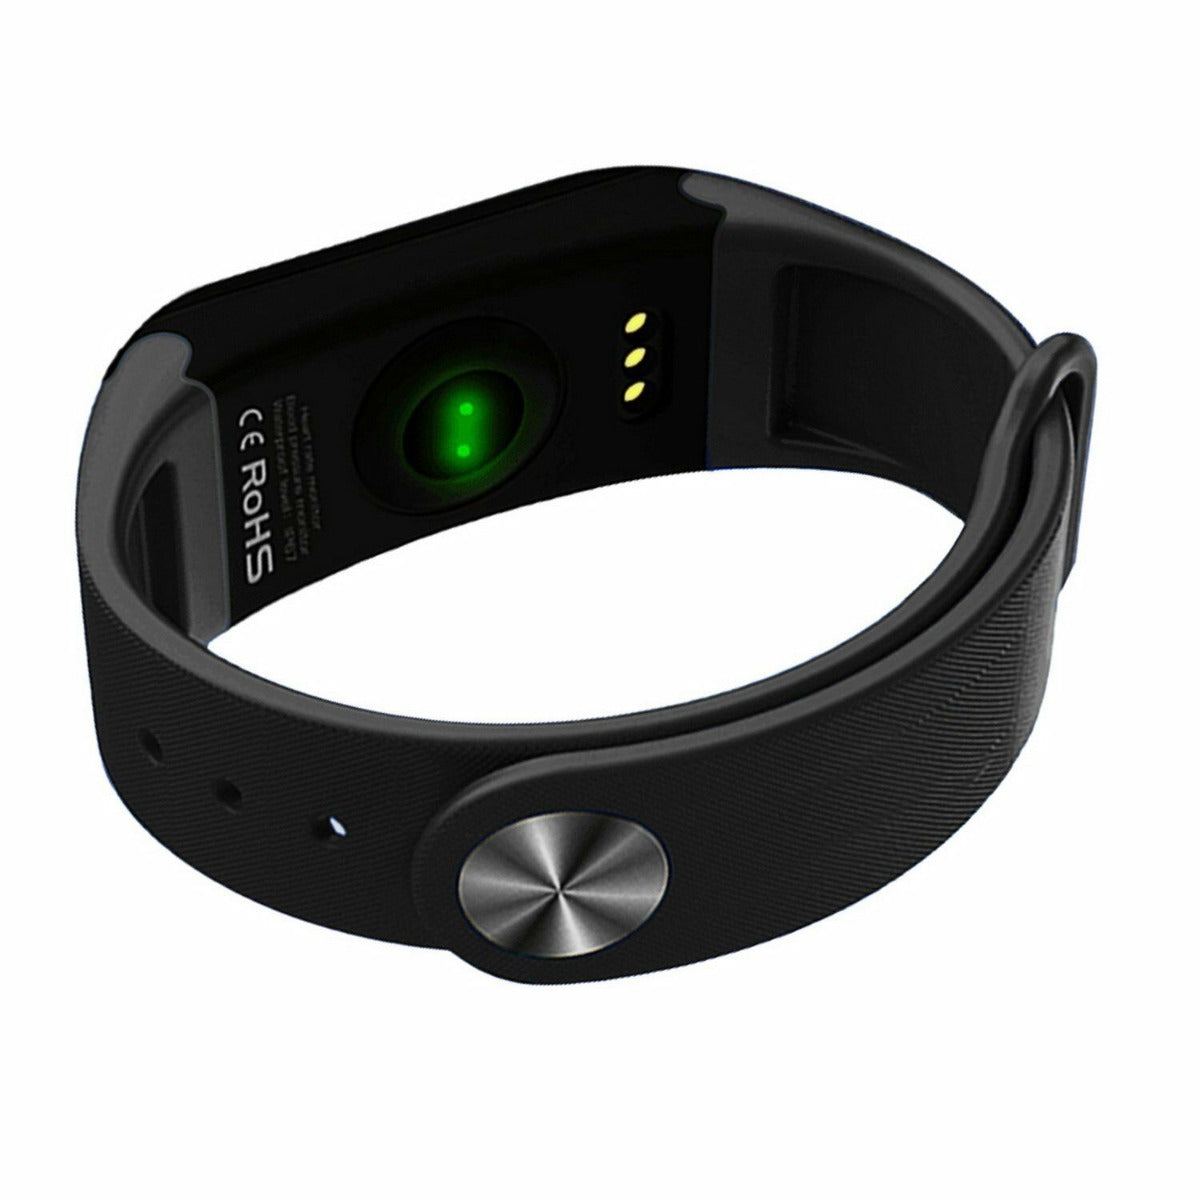 Fitness smart watch f1 orologio intelligente frequenza cardiaca bluetooh touch